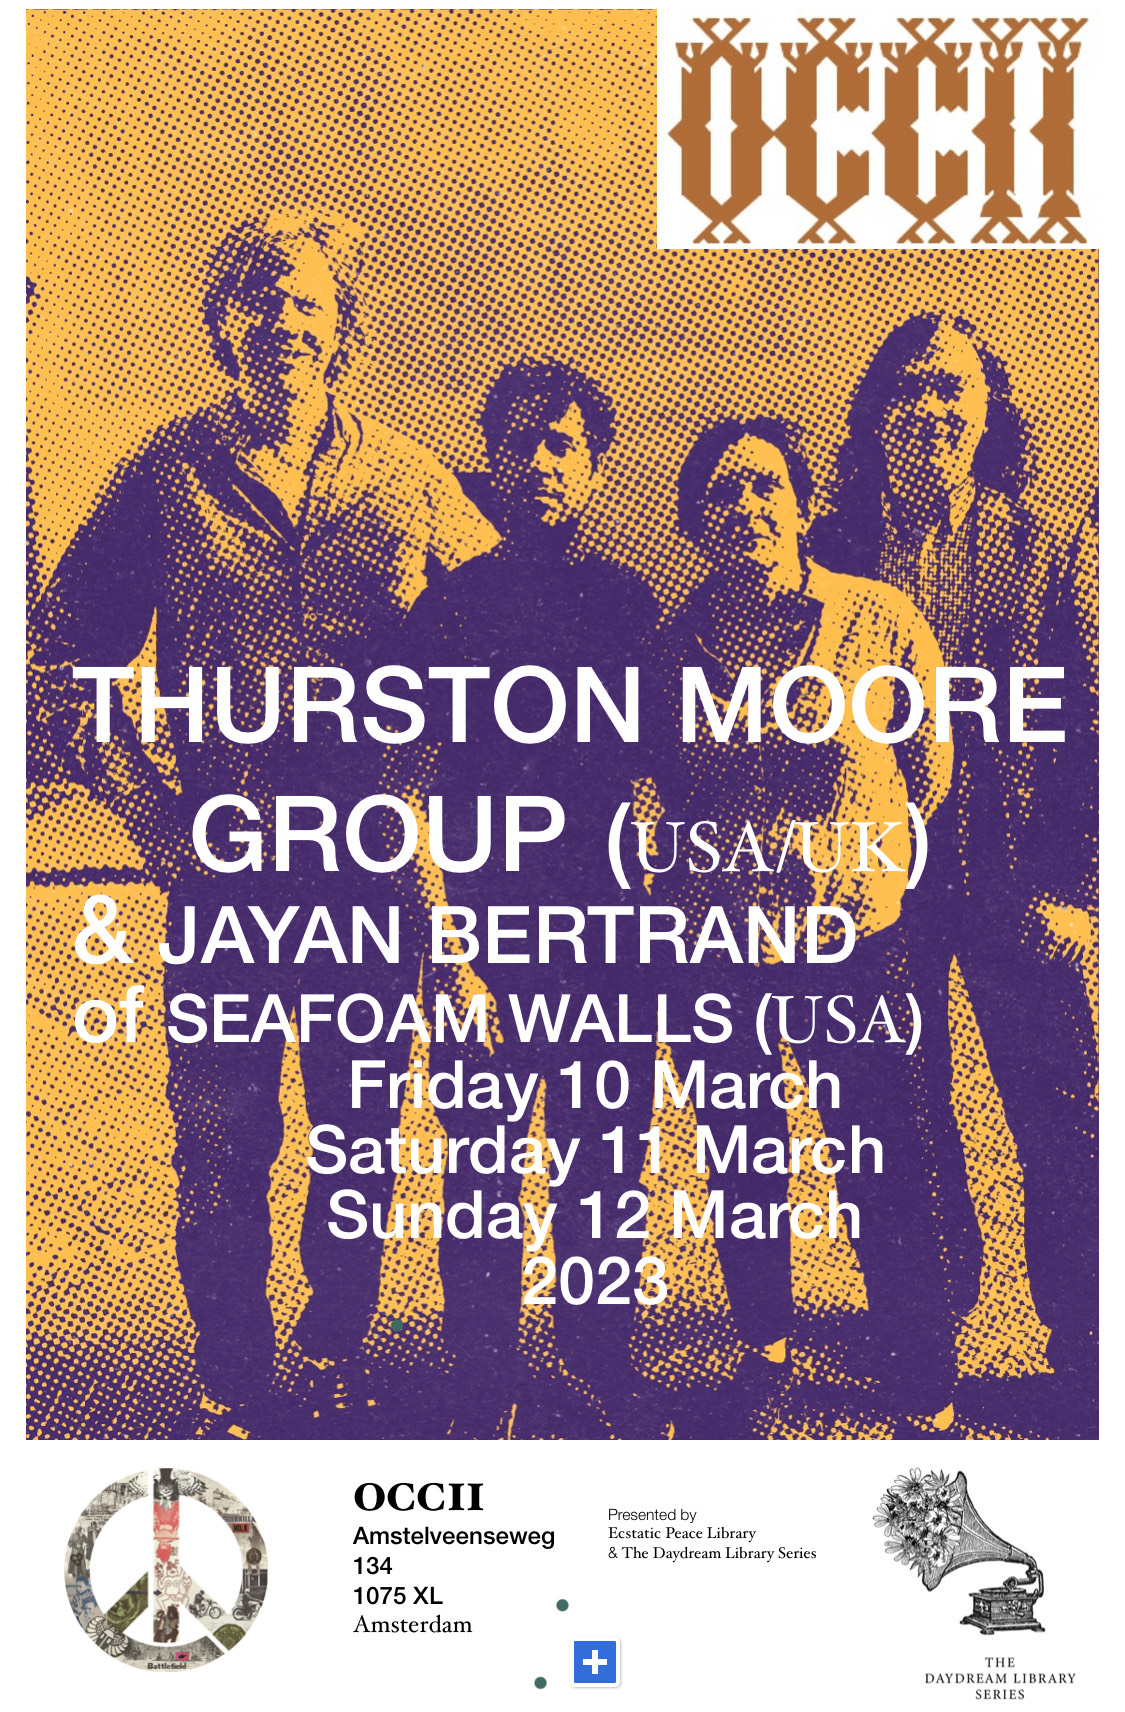 THURSTON MOORE GROUP (US/UK) + JAYAN BERTRAND (US, SEAFOAM WALLS)